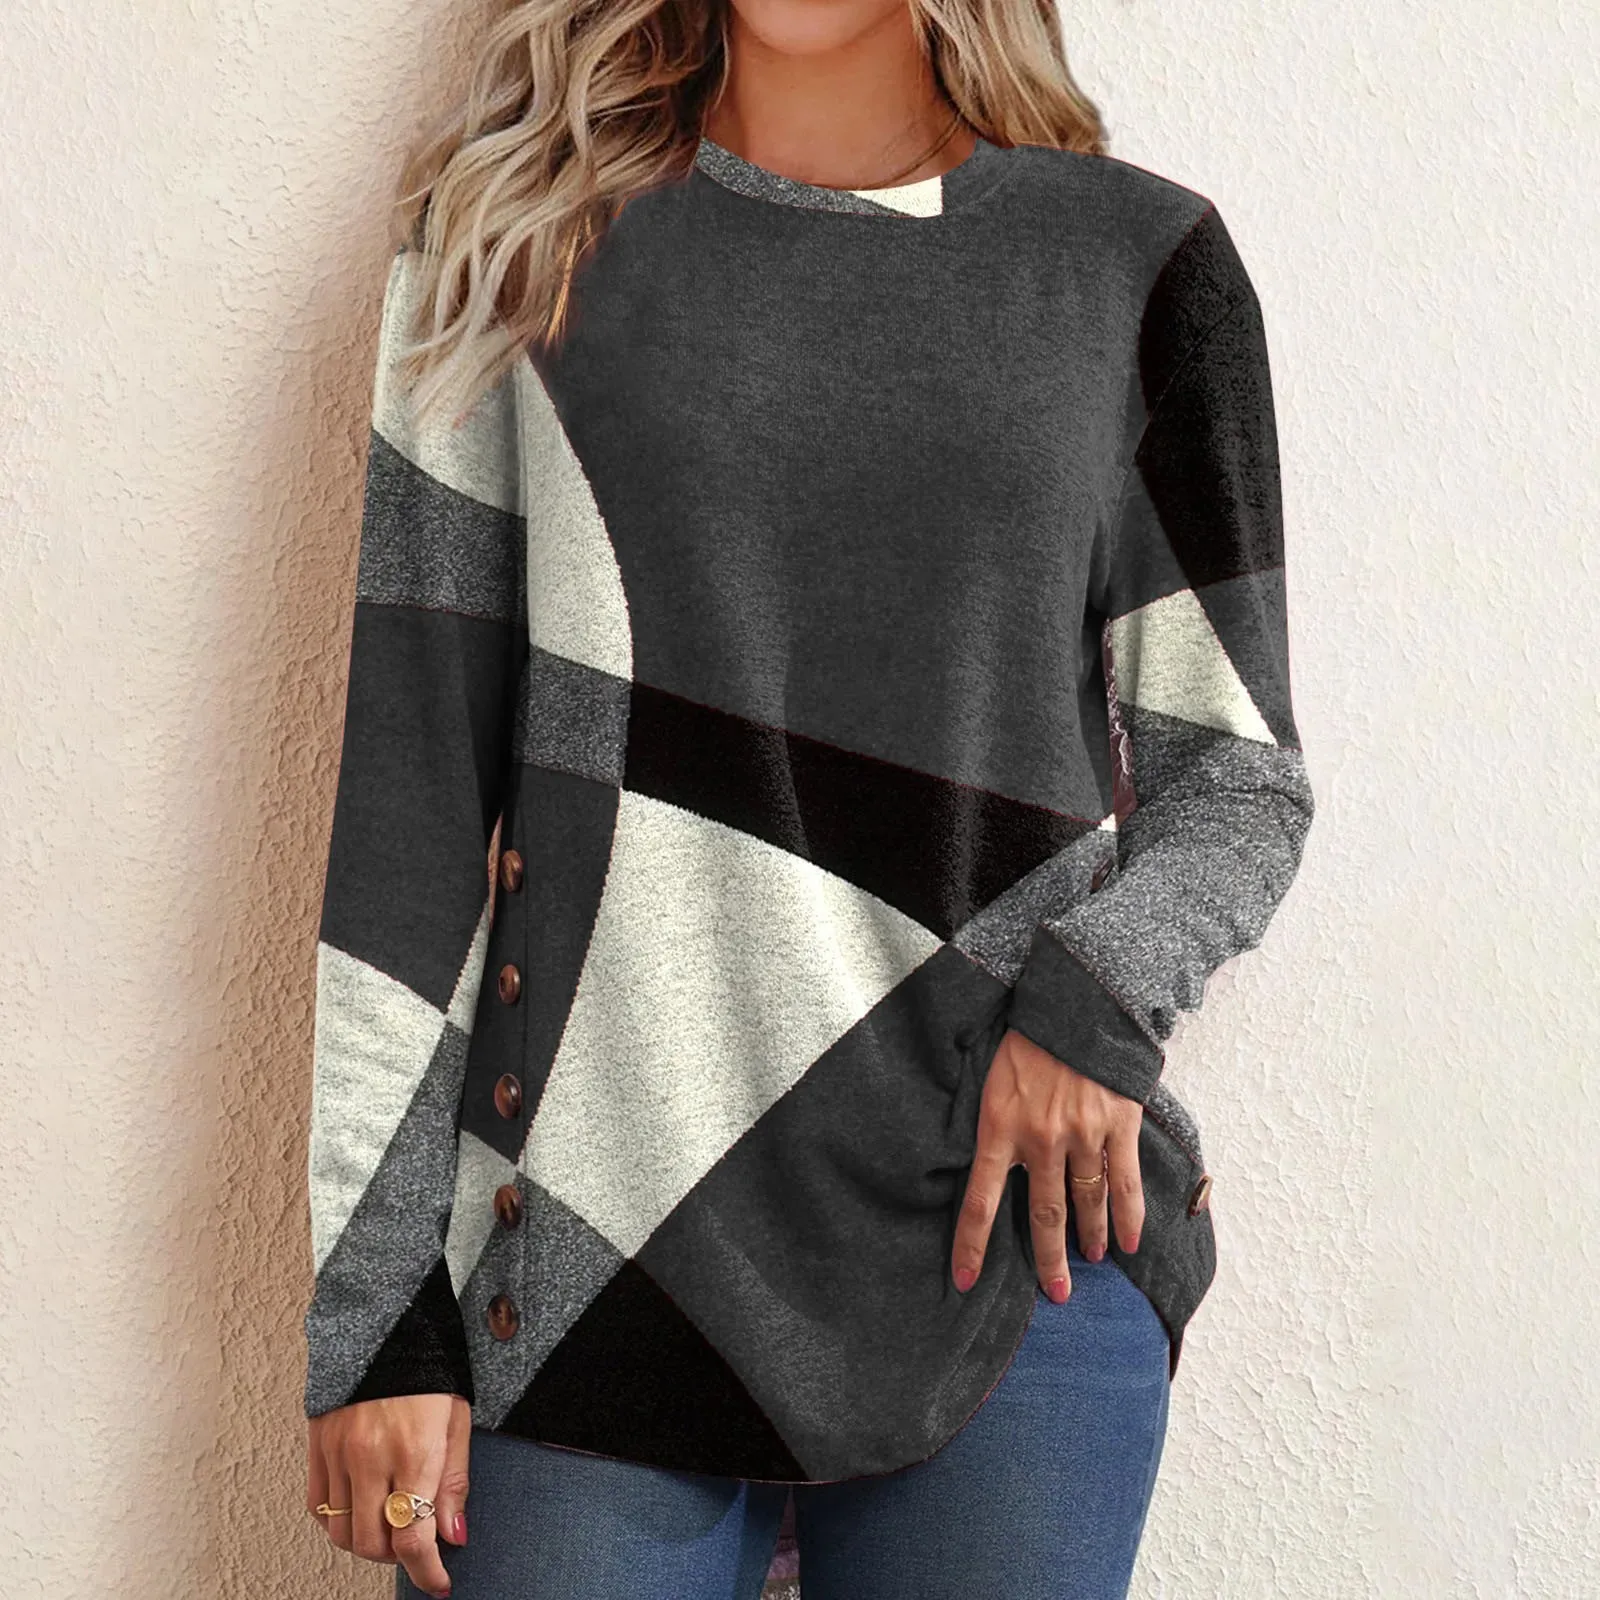 Купи Women's Patchwork Tshirt Pullover Autumn Winter Round Neck Sweatshirt Long Sleeve Print Fashion Casual Loose Women Shirt Tops за 375 рублей в магазине AliExpress